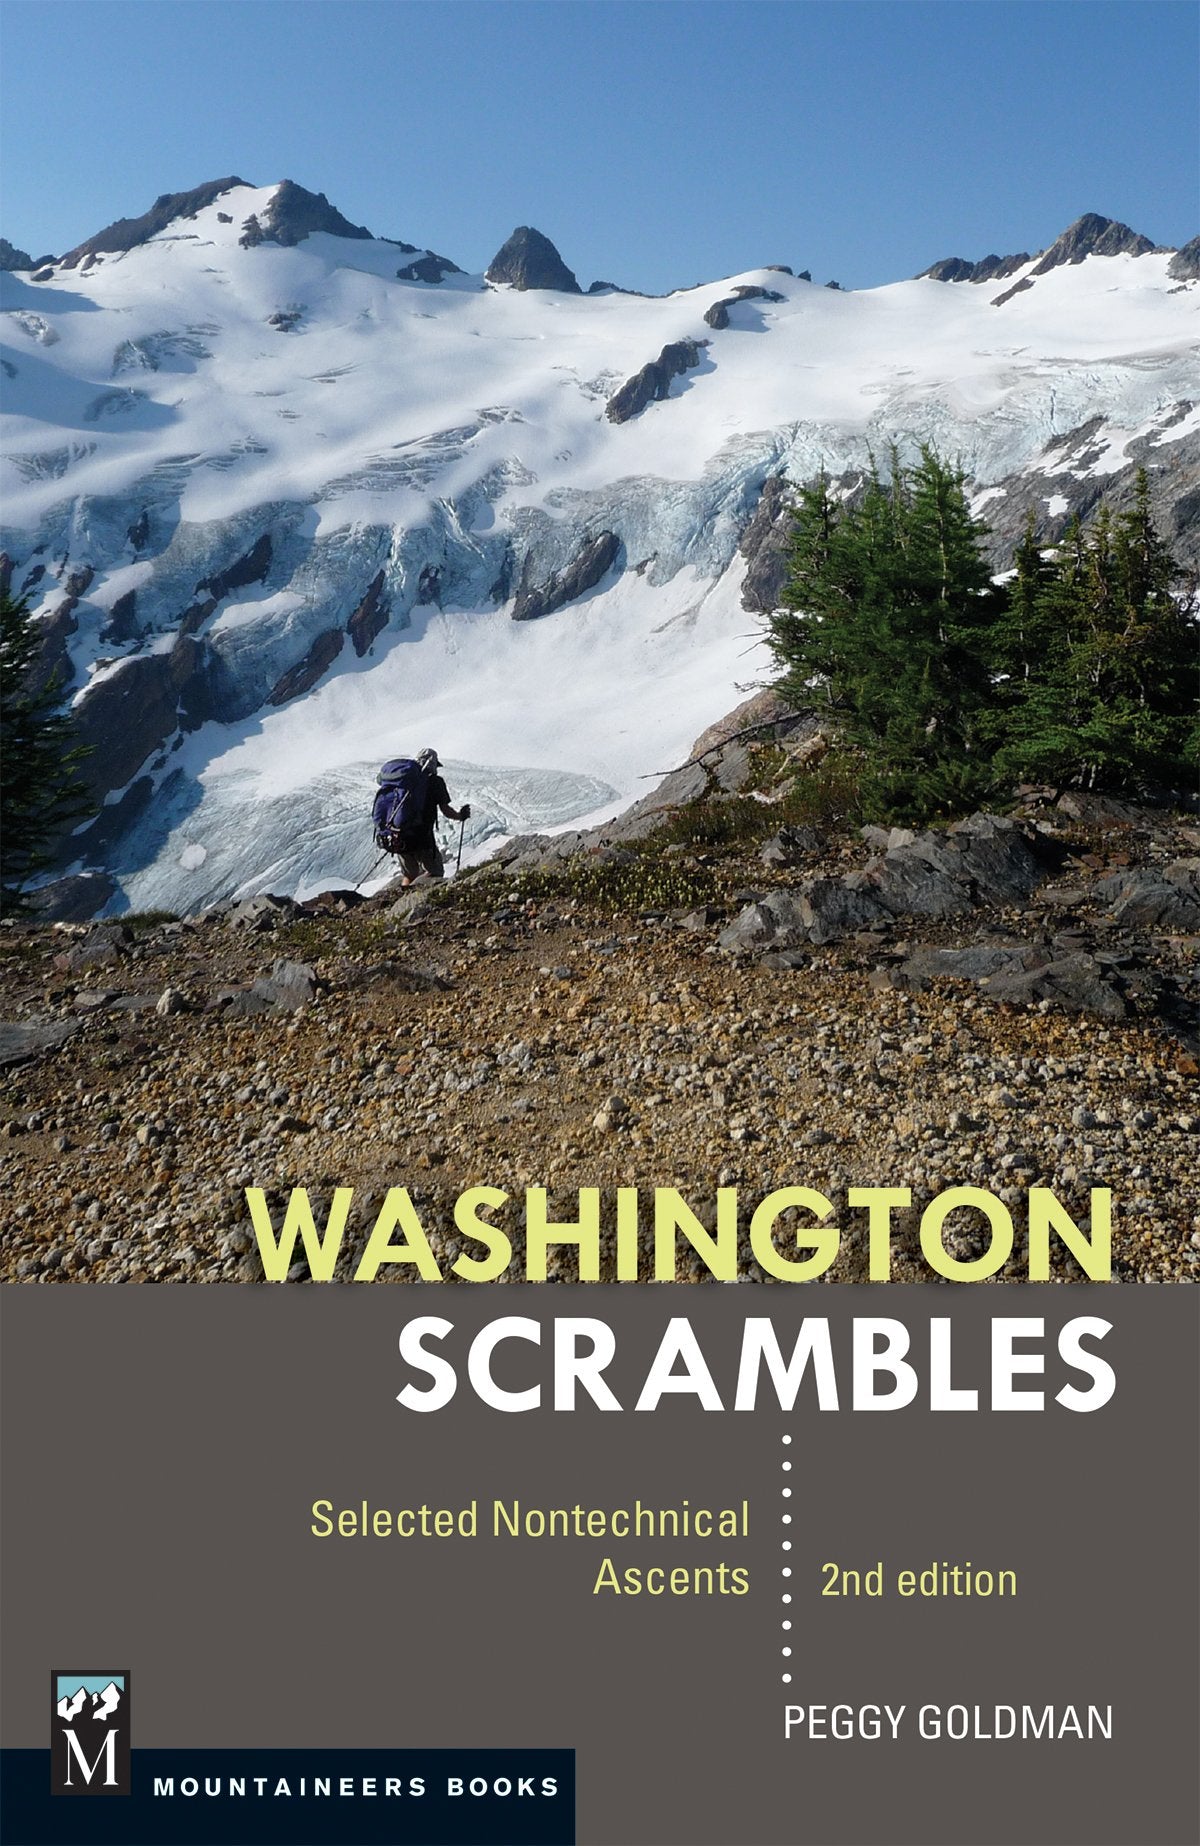 Washington Scrambles: Selected Nontechnical Ascents, 2nd Edition